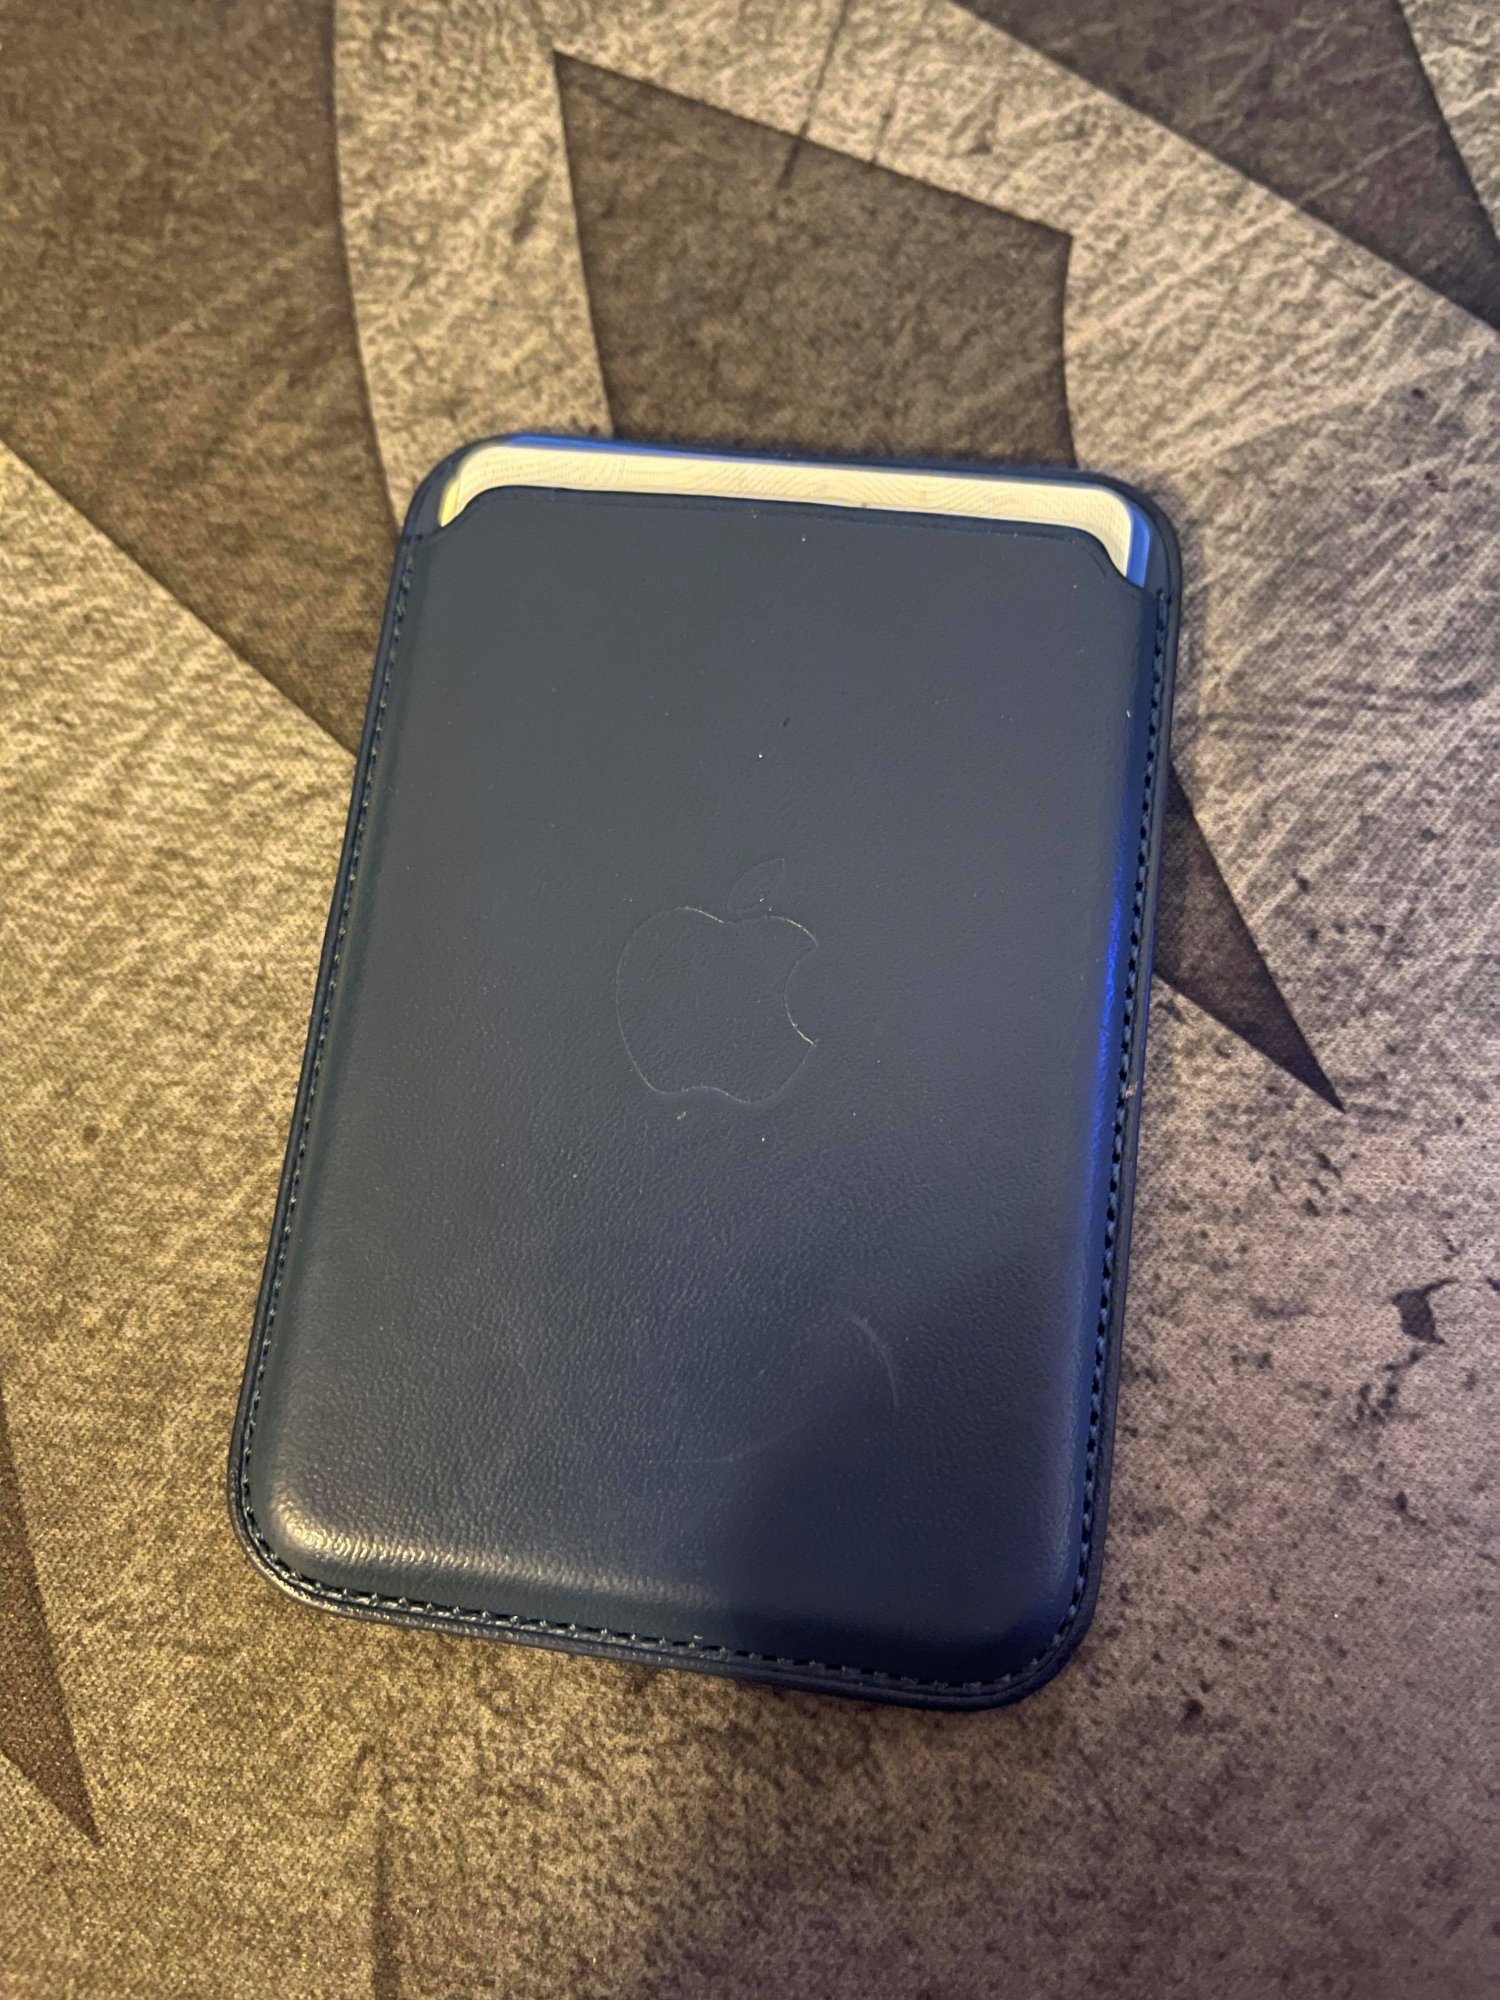 MagSafe wallet edges peeling/melting : r/MagSafe